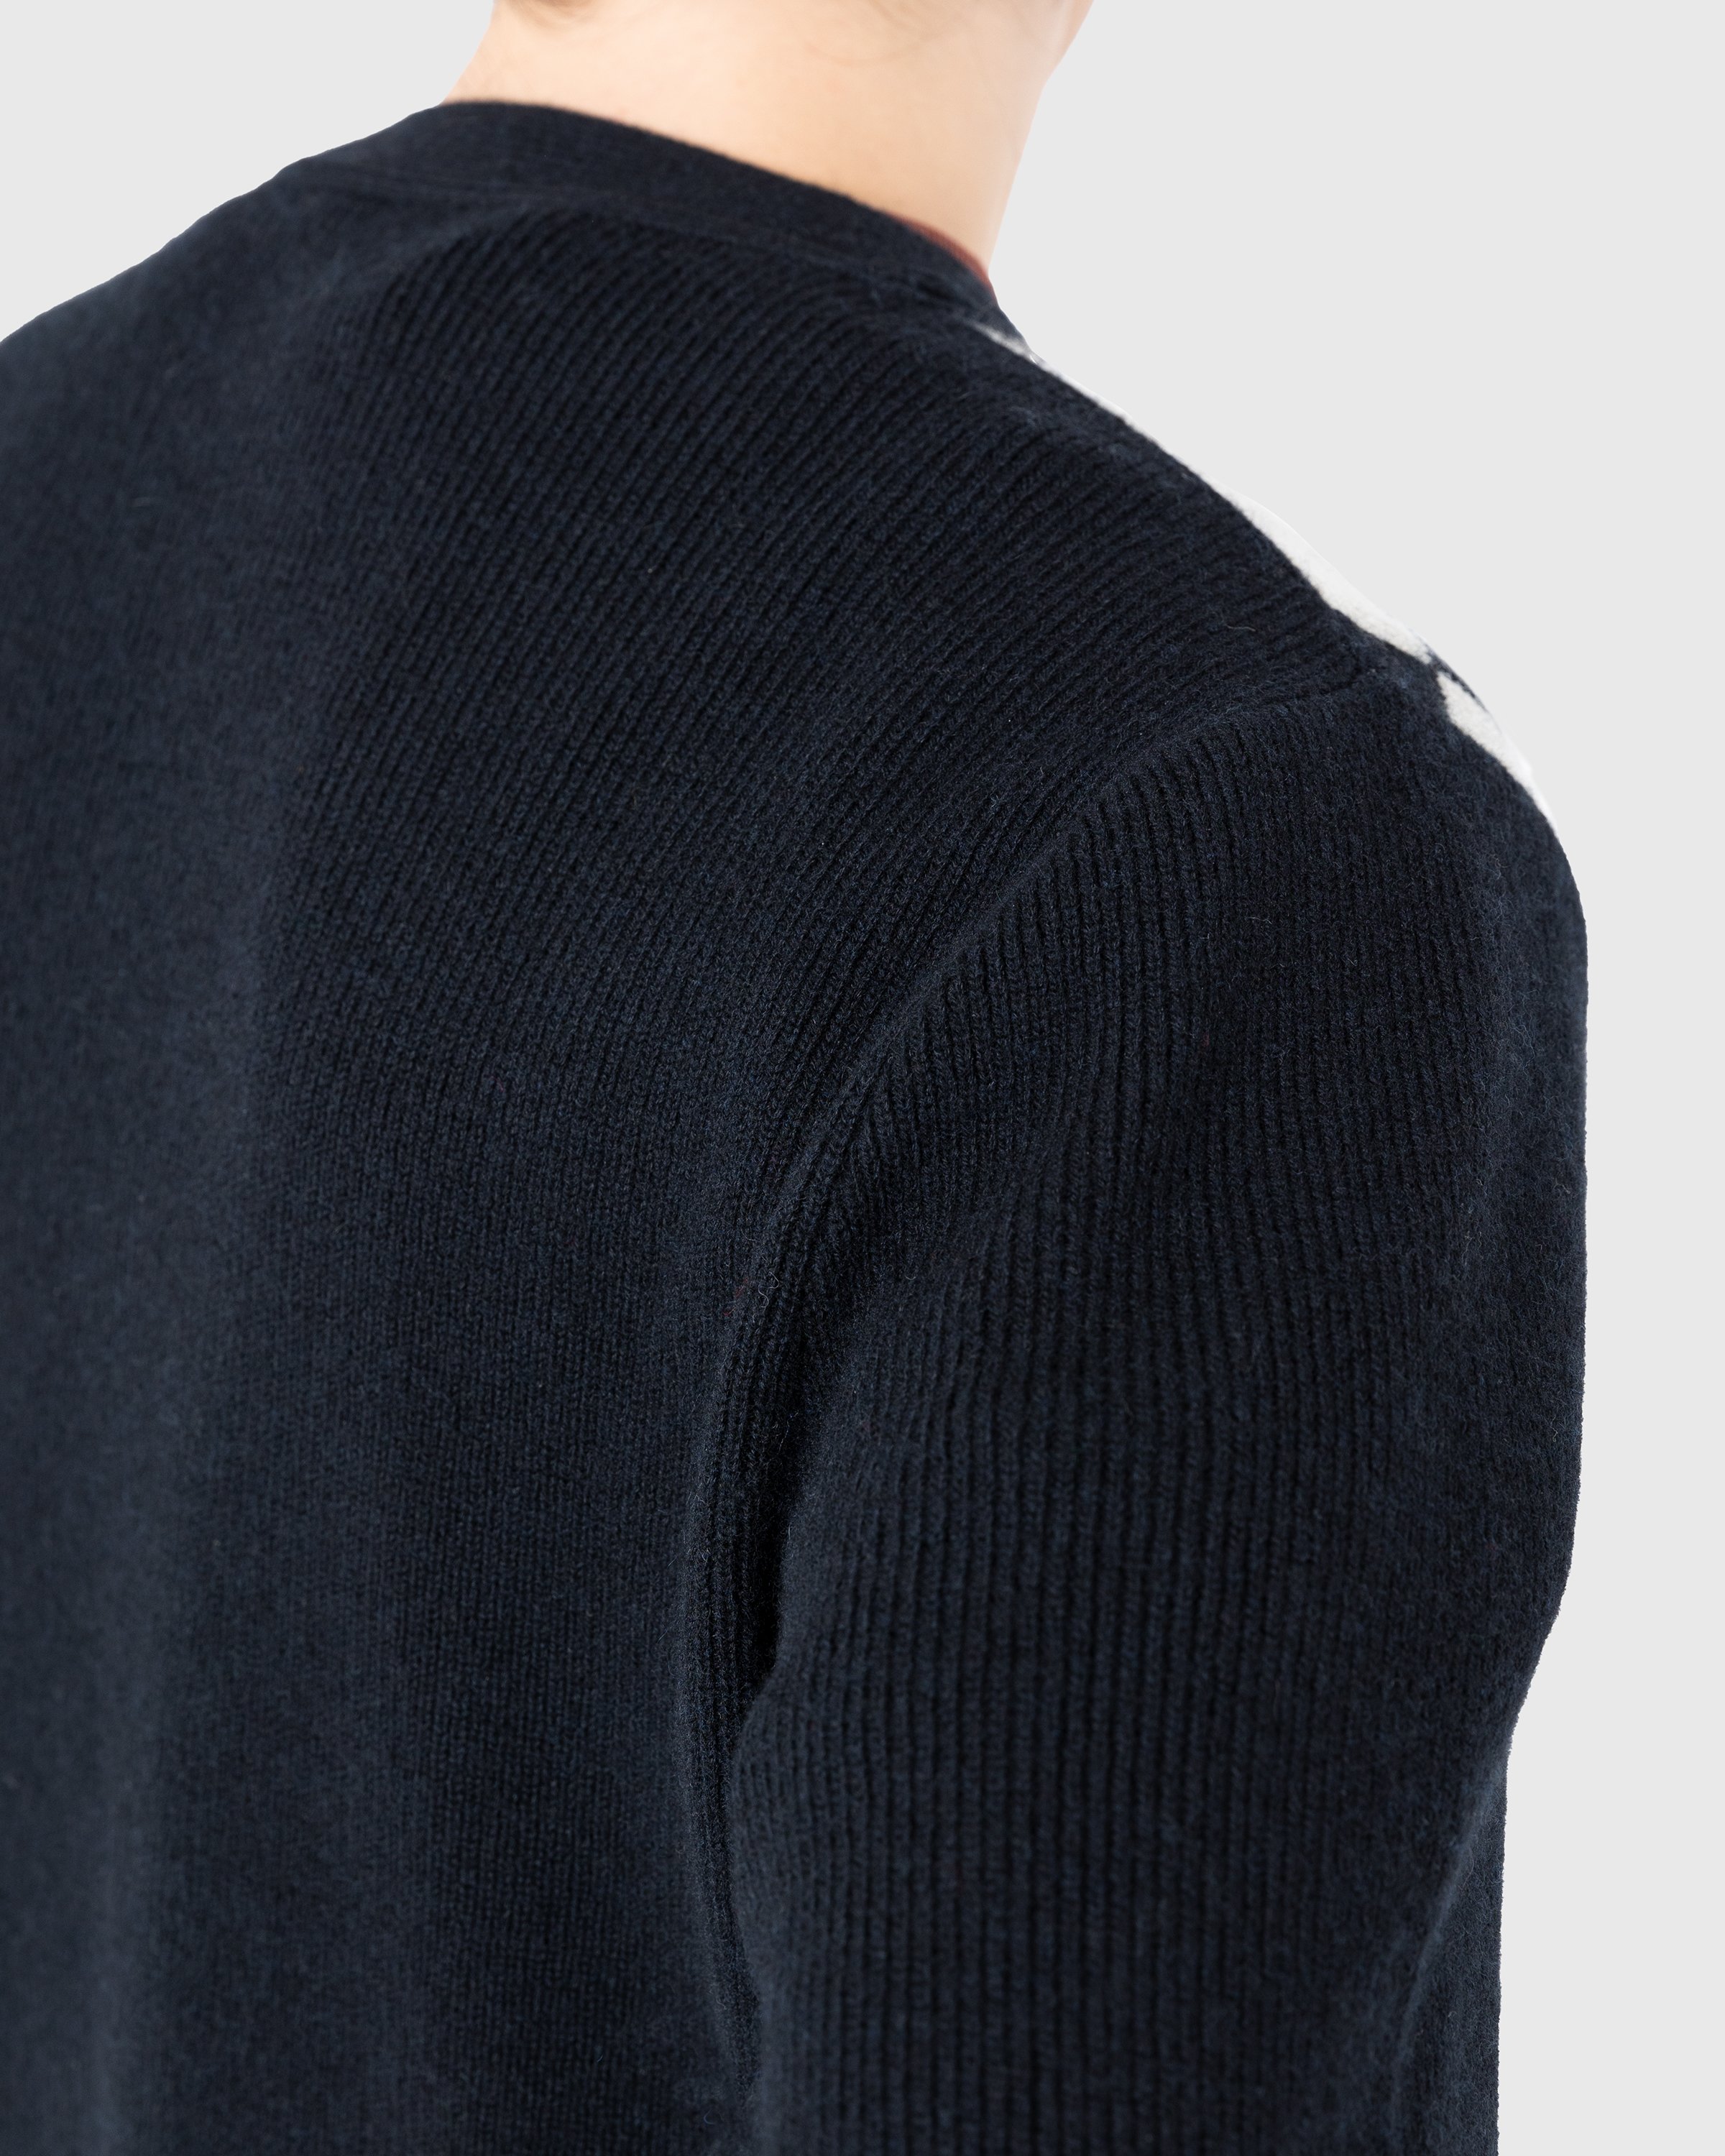 Acne Studios - Knit Wool Cardigan Black/Oatmeal Melange - Clothing - Black - Image 5